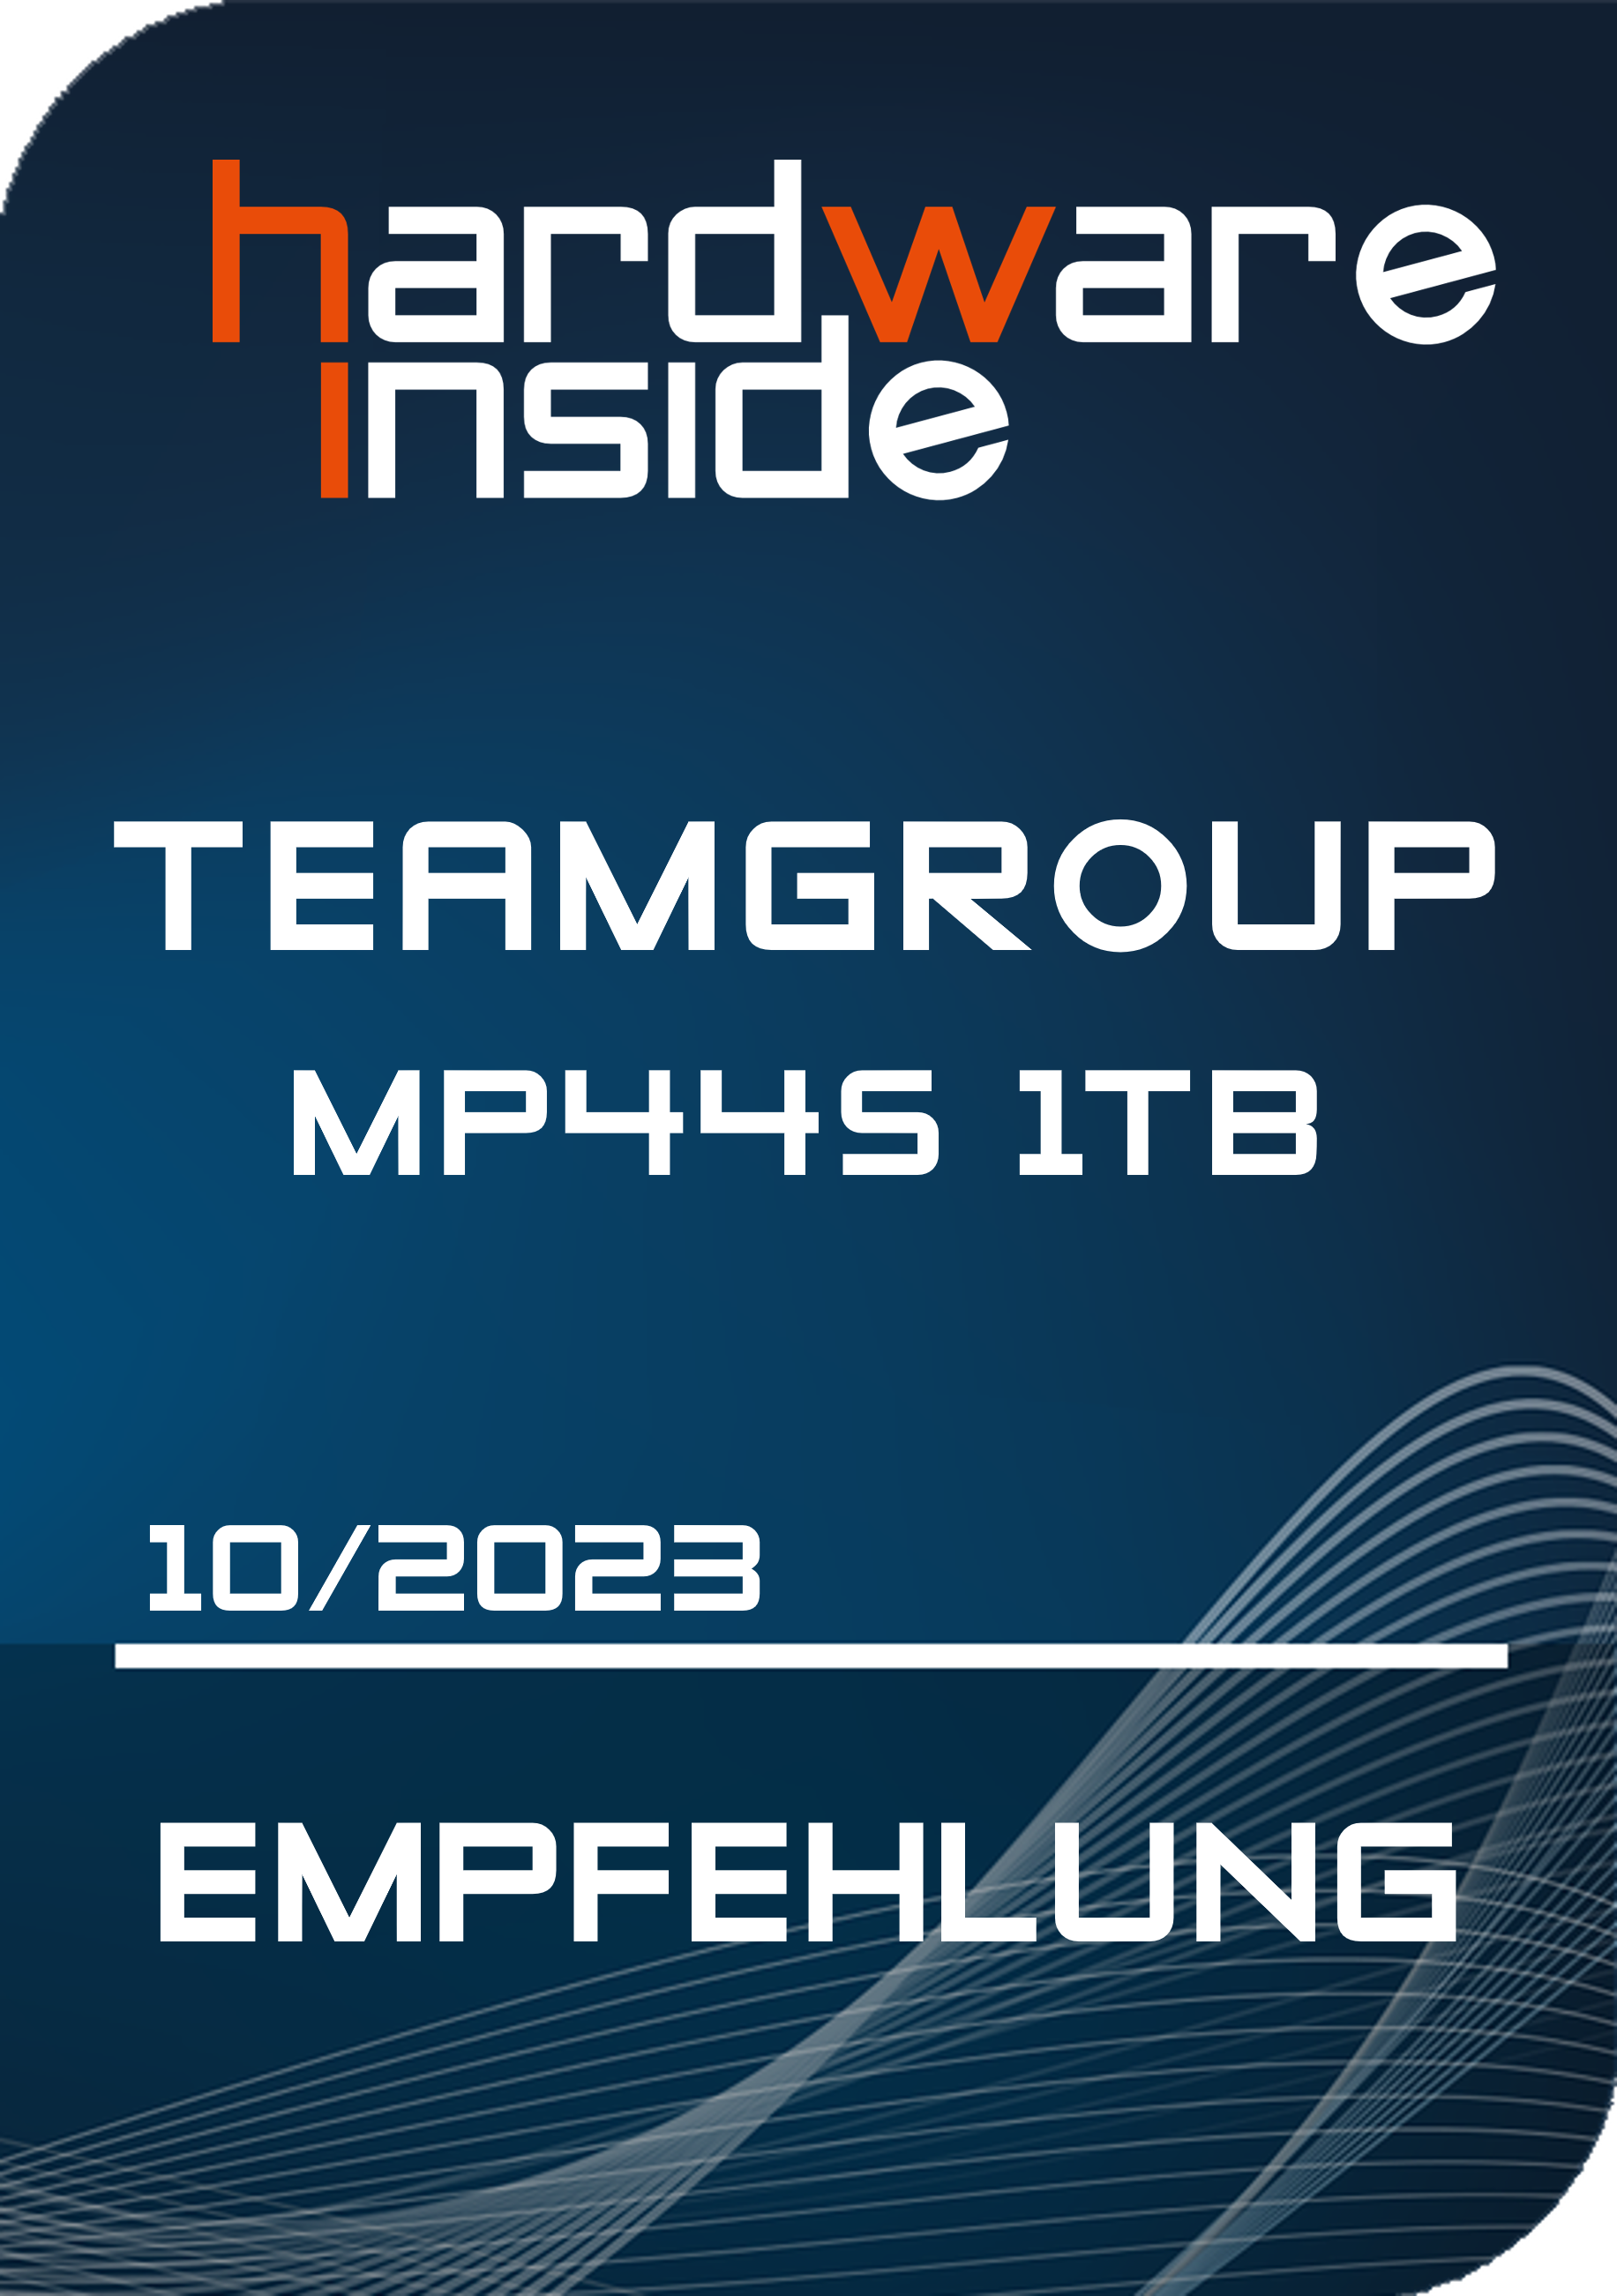 teamgroup-mp44s-1tb-award.png